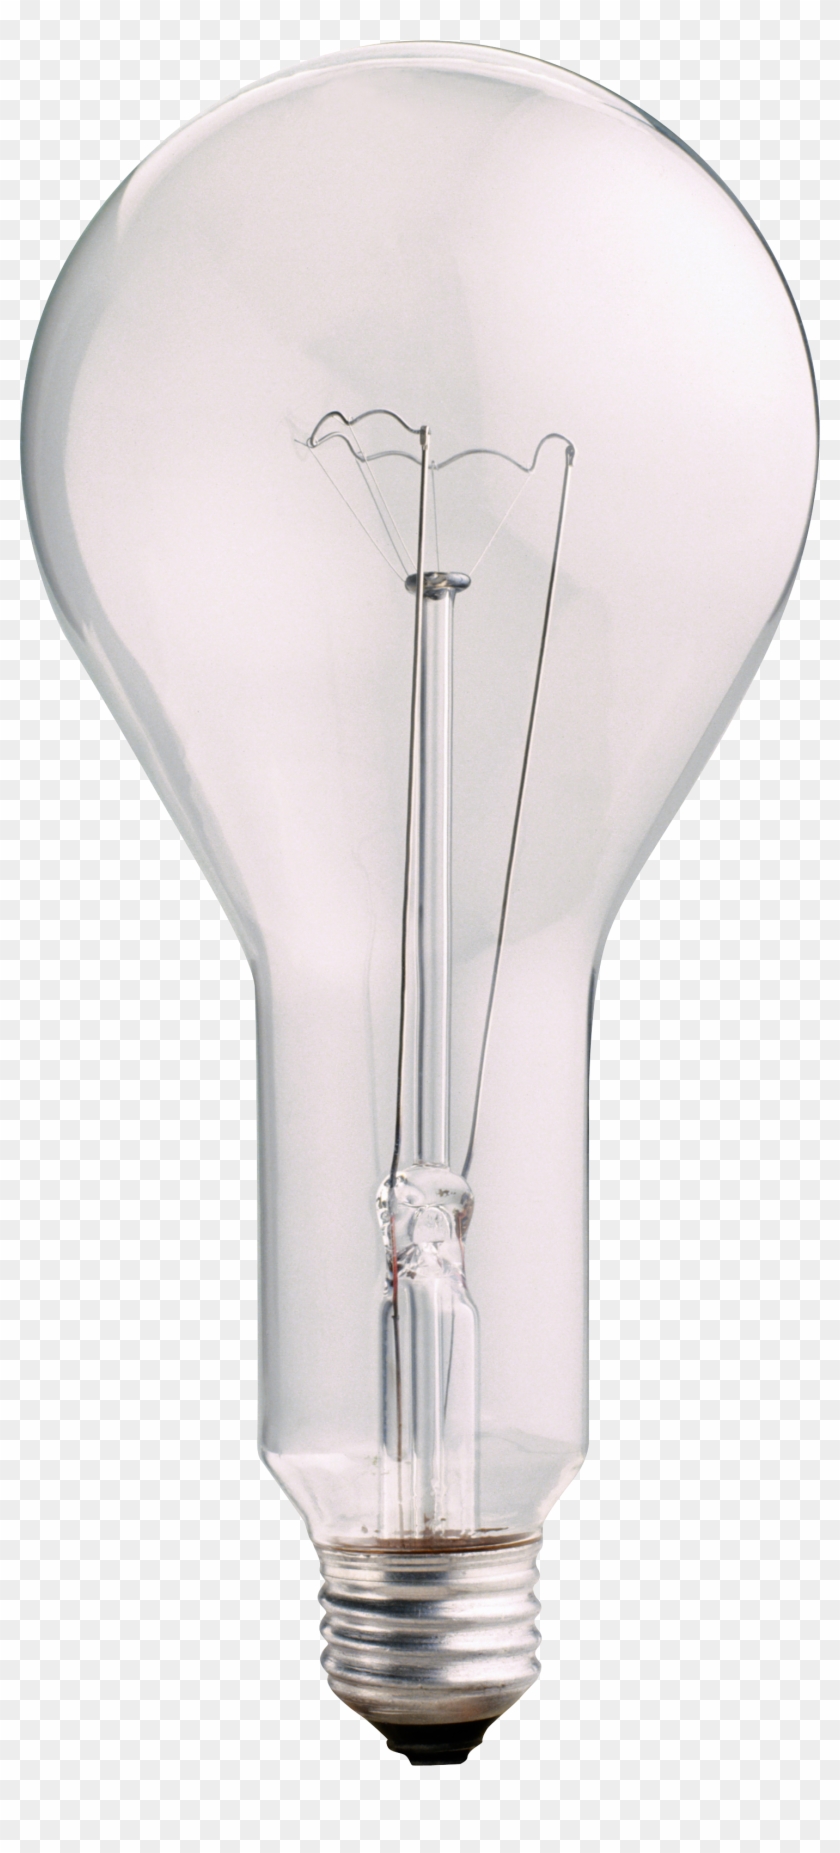 Lamp Png Image - Light Bulb Nobacks Clipart #1212279